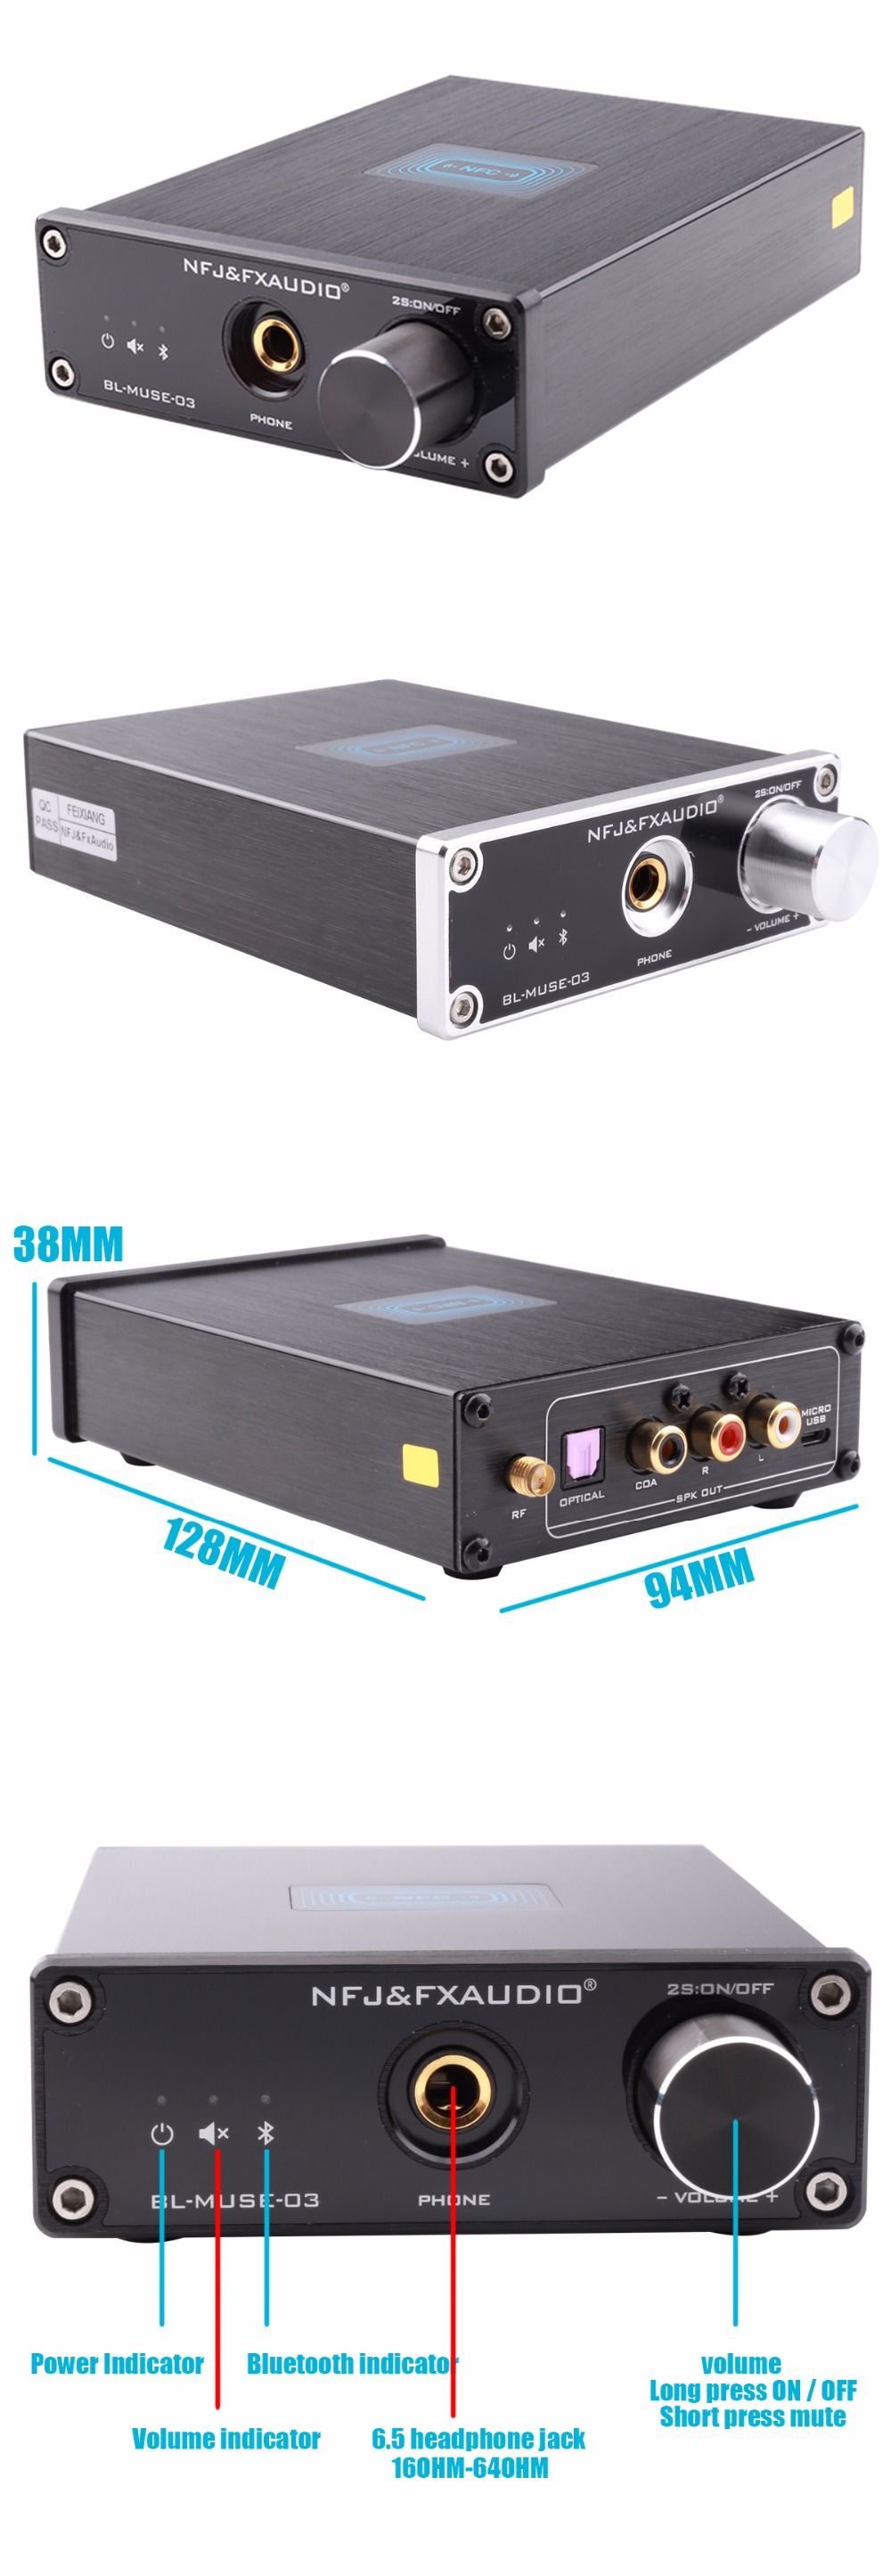 FX-Audio-BL-MUSE-03-bluetooth-42-CSRA64215-Audio-Receiver-DAC-Decoding-Lossless-MINI-HiFi-Sound-Qual-1379826